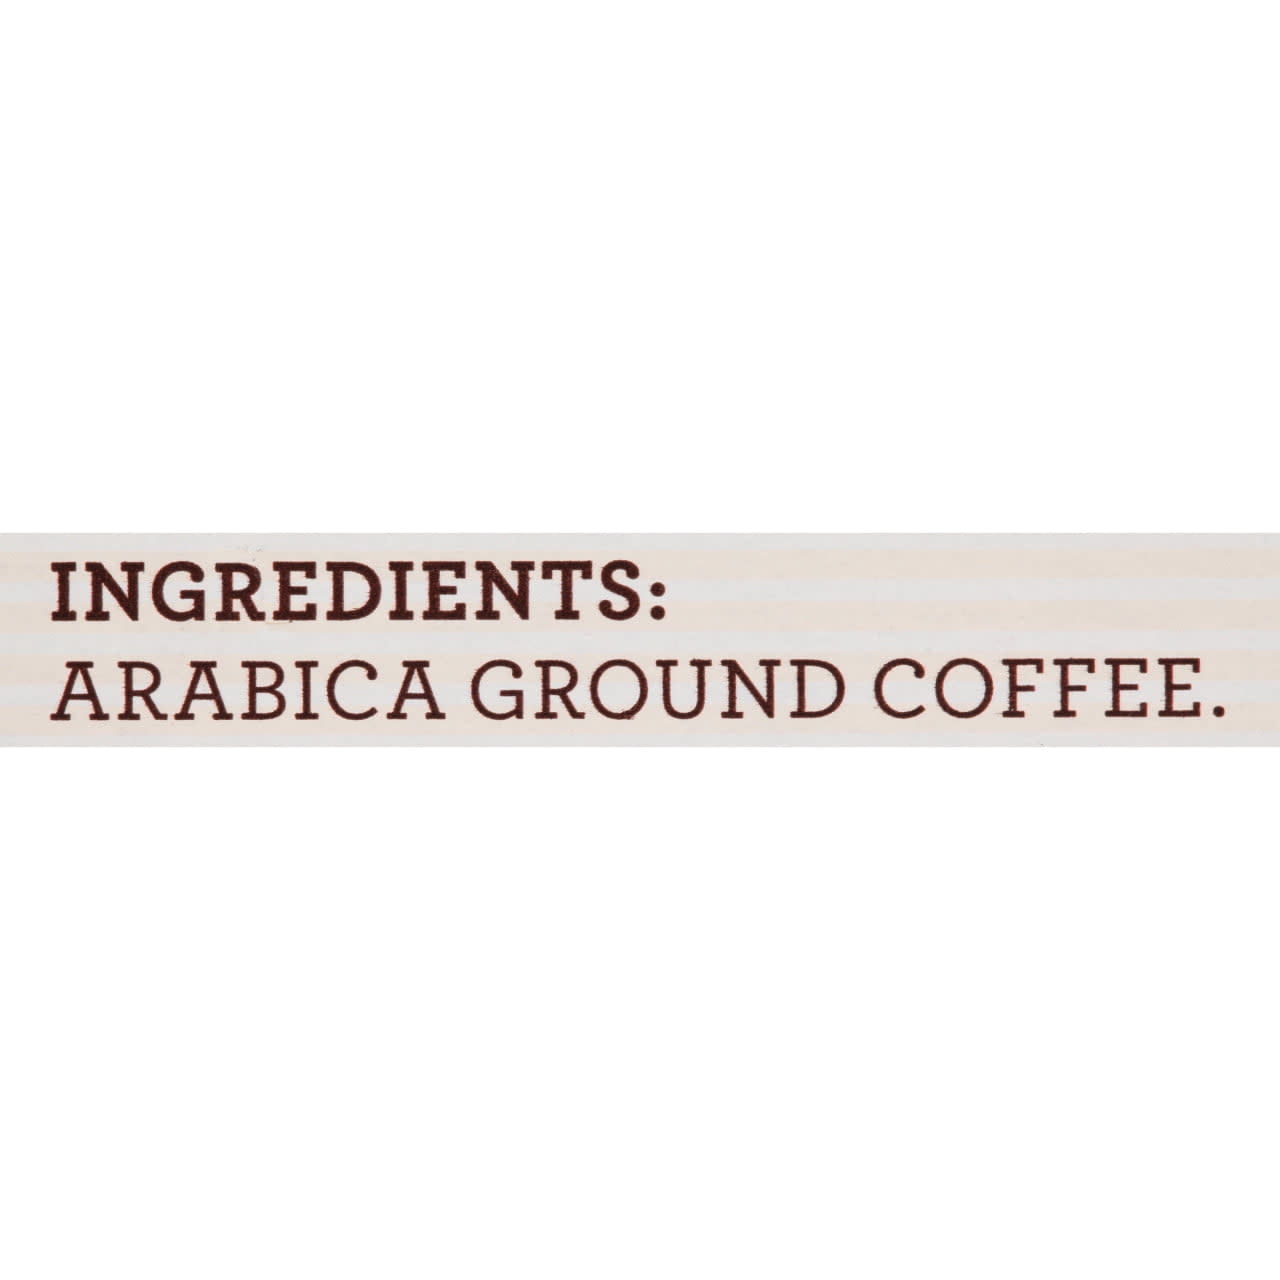 Seattle's Best Coffee, House Blend Medium Roast K-Cup Coffee Pods, 24